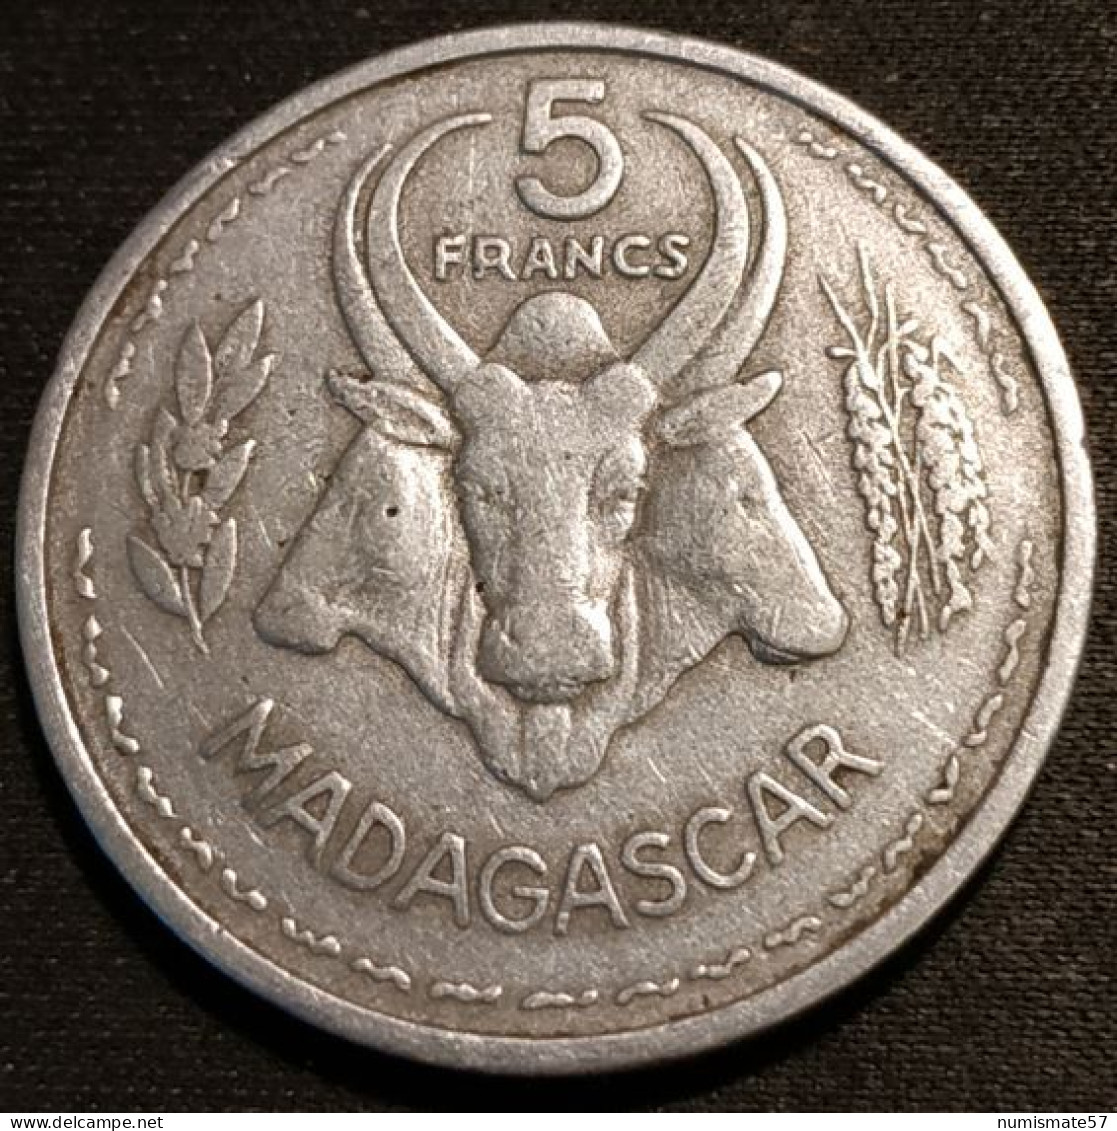 MADAGASCAR - 5 FRANCS 1953 - KM 5 - Madagaskar